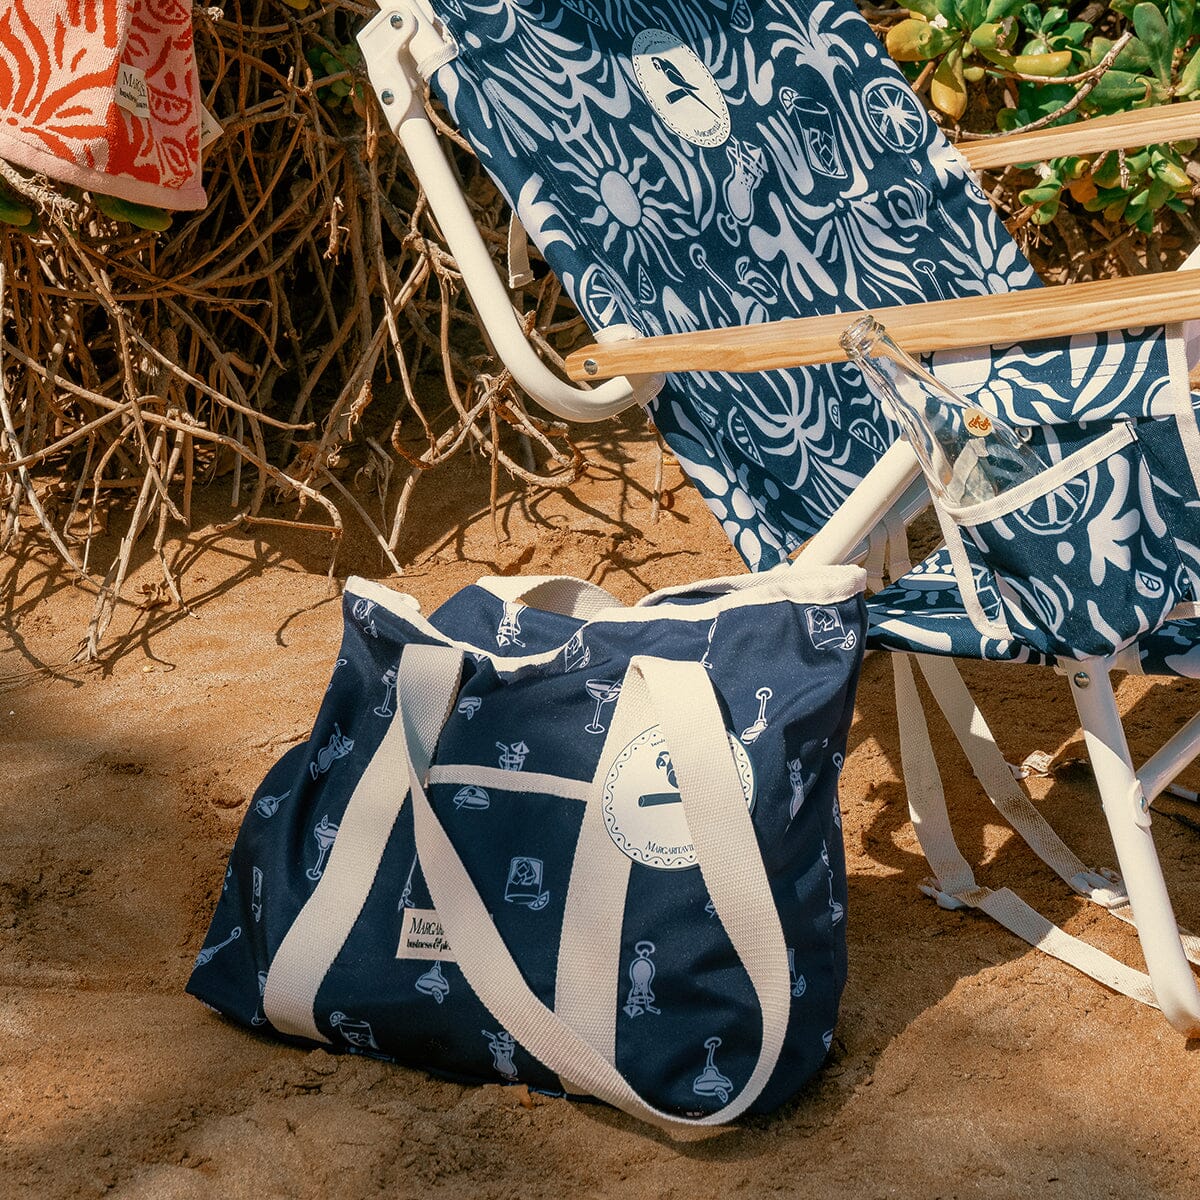 The Mañana Chair - Continental Drifter Tiki Mañana Beach Chair Margaritaville by B&P Co. 